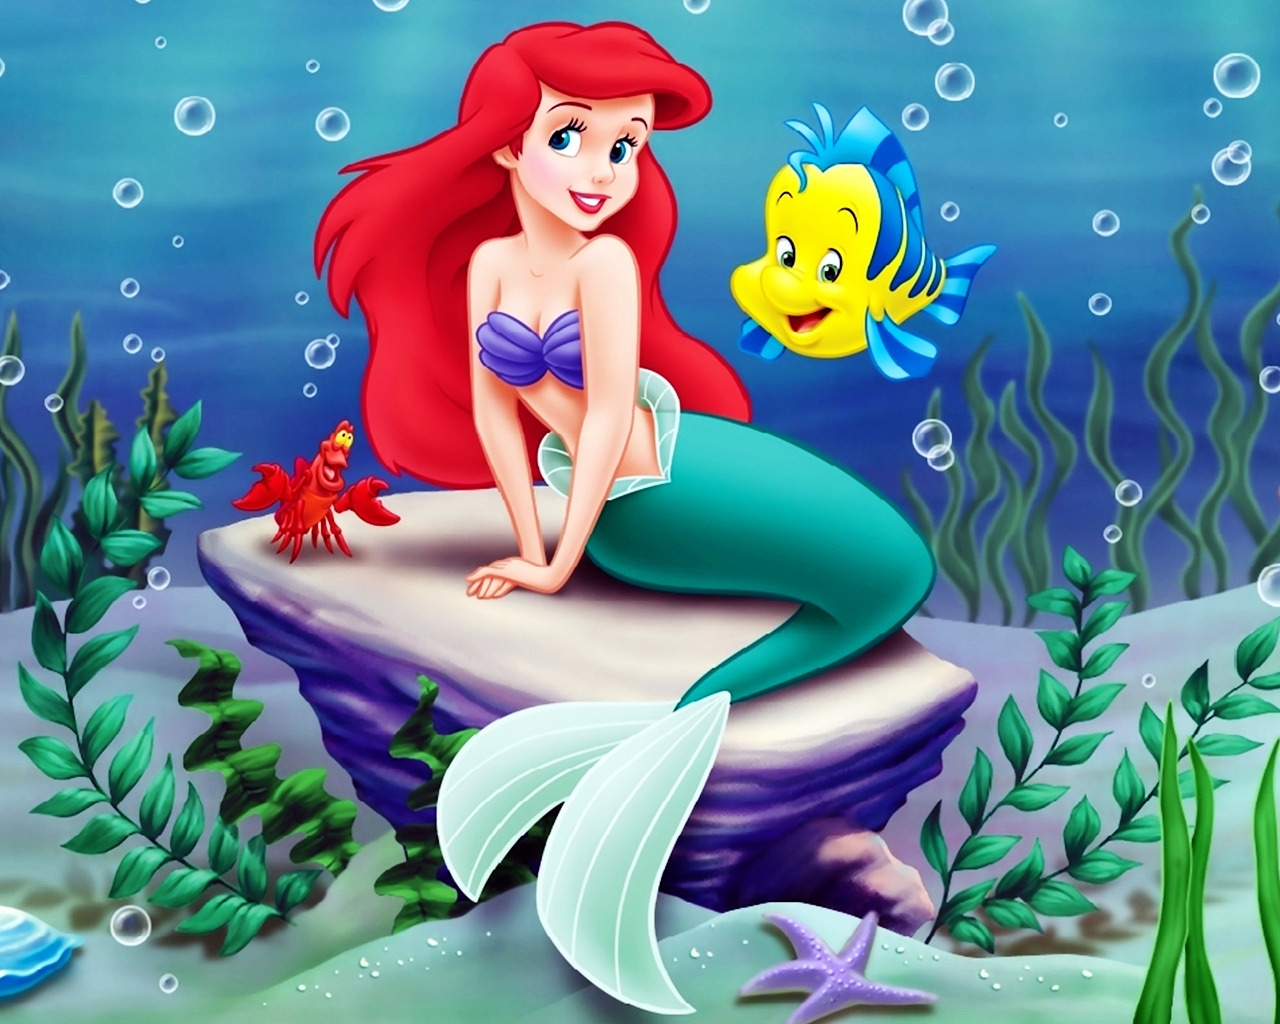 Little Mermaid Ariel for 1280 x 1024 resolution